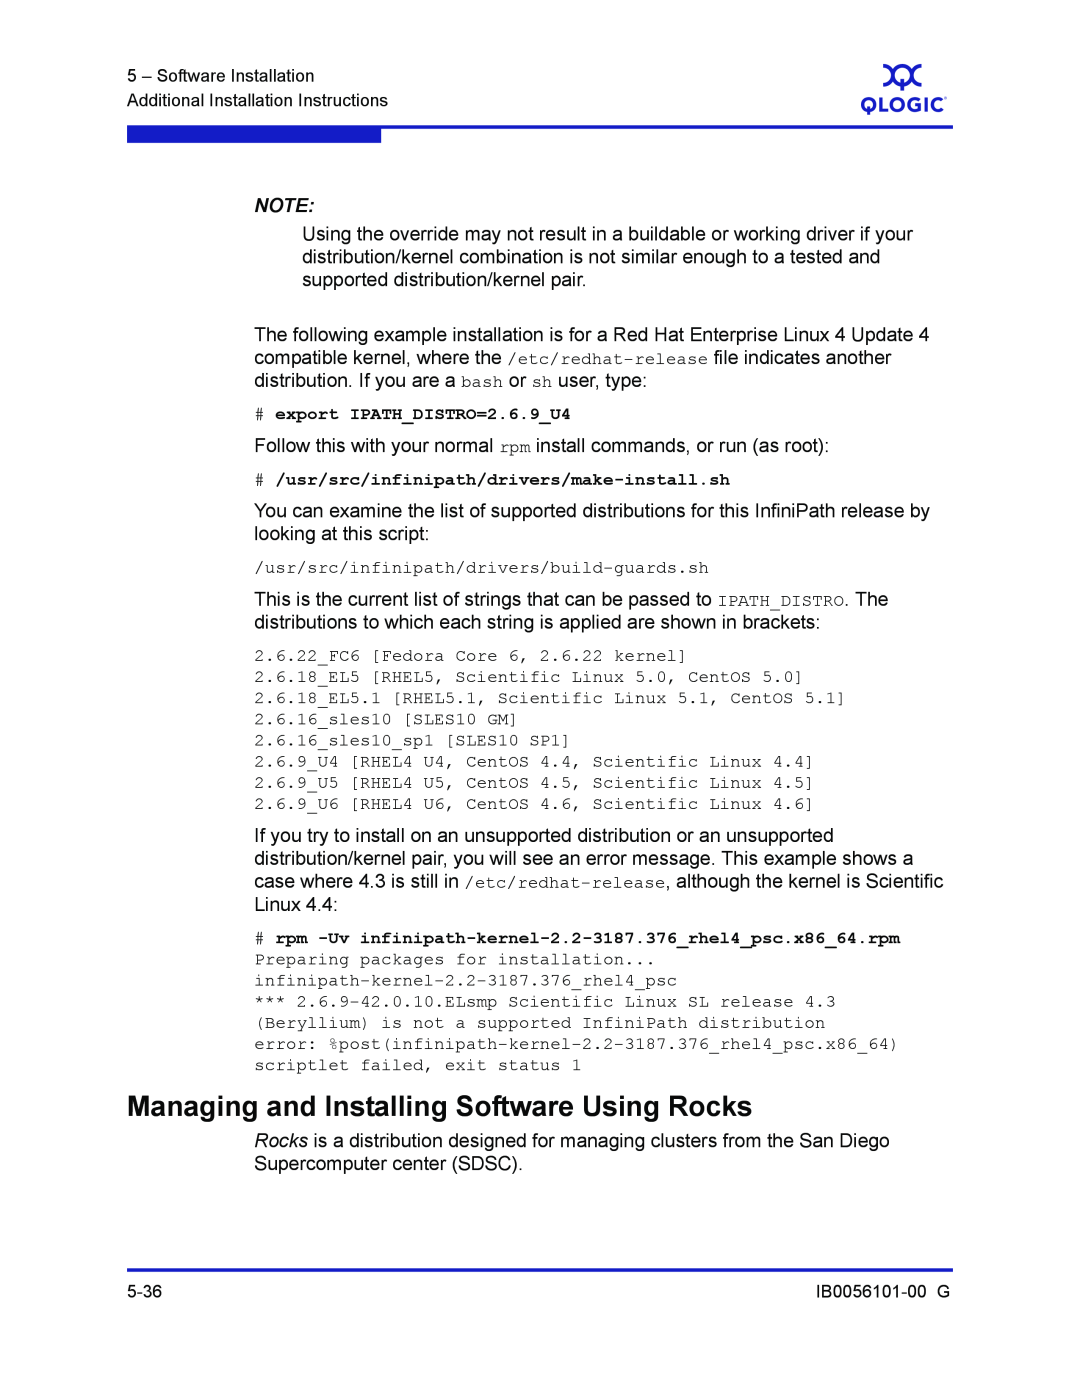 Q-Logic IB0056101-00 G manual Managing and Installing Software Using Rocks 